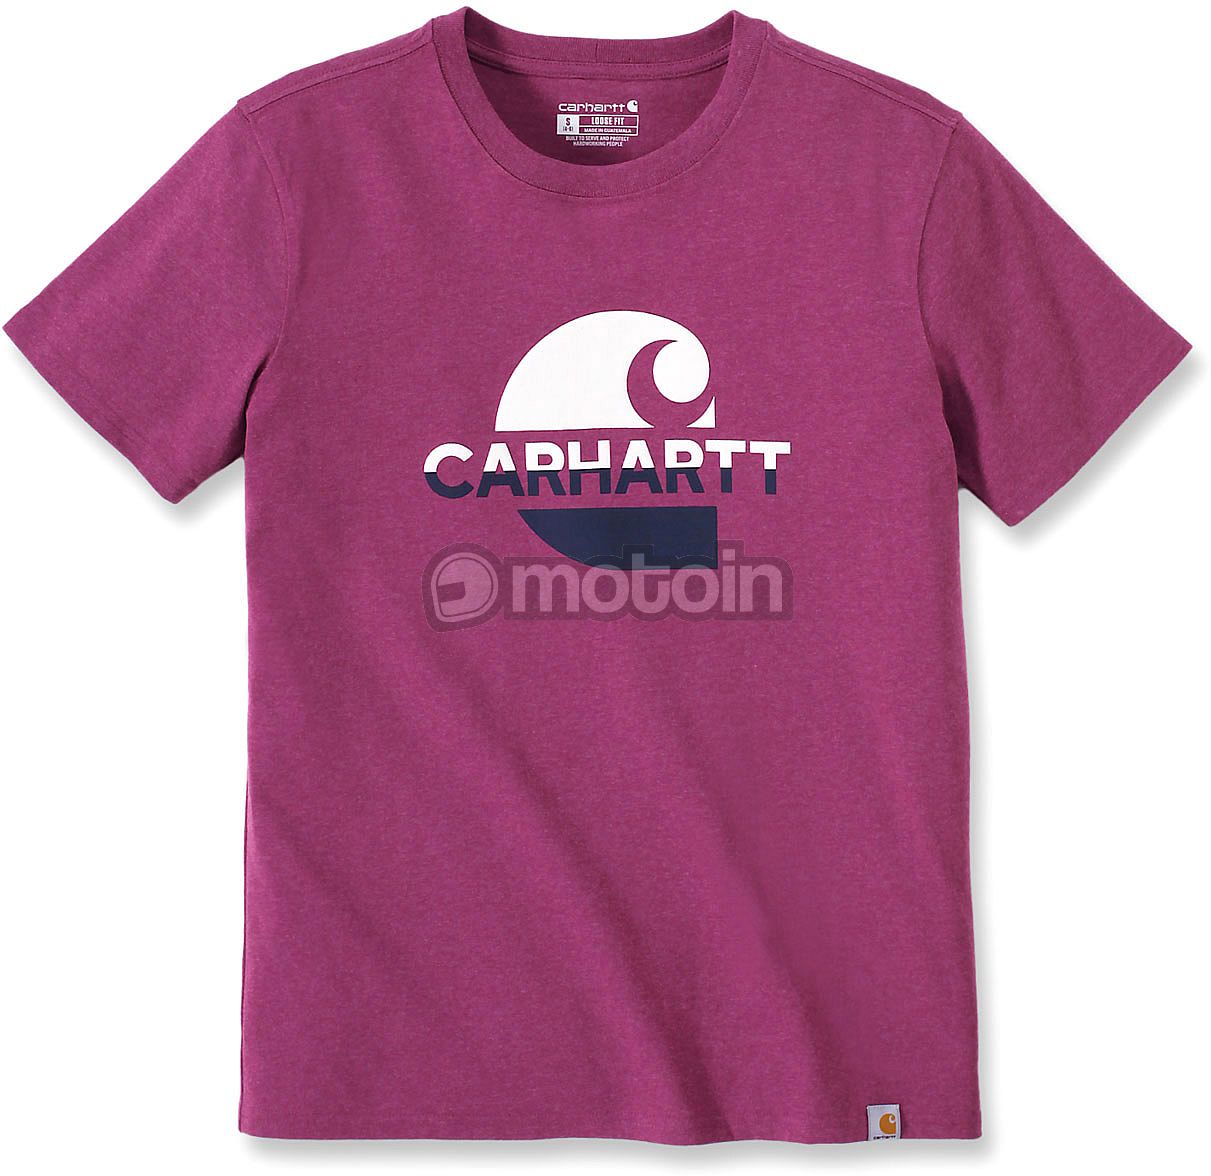 Carhartt 'C' Graphic, t-shirt mulher